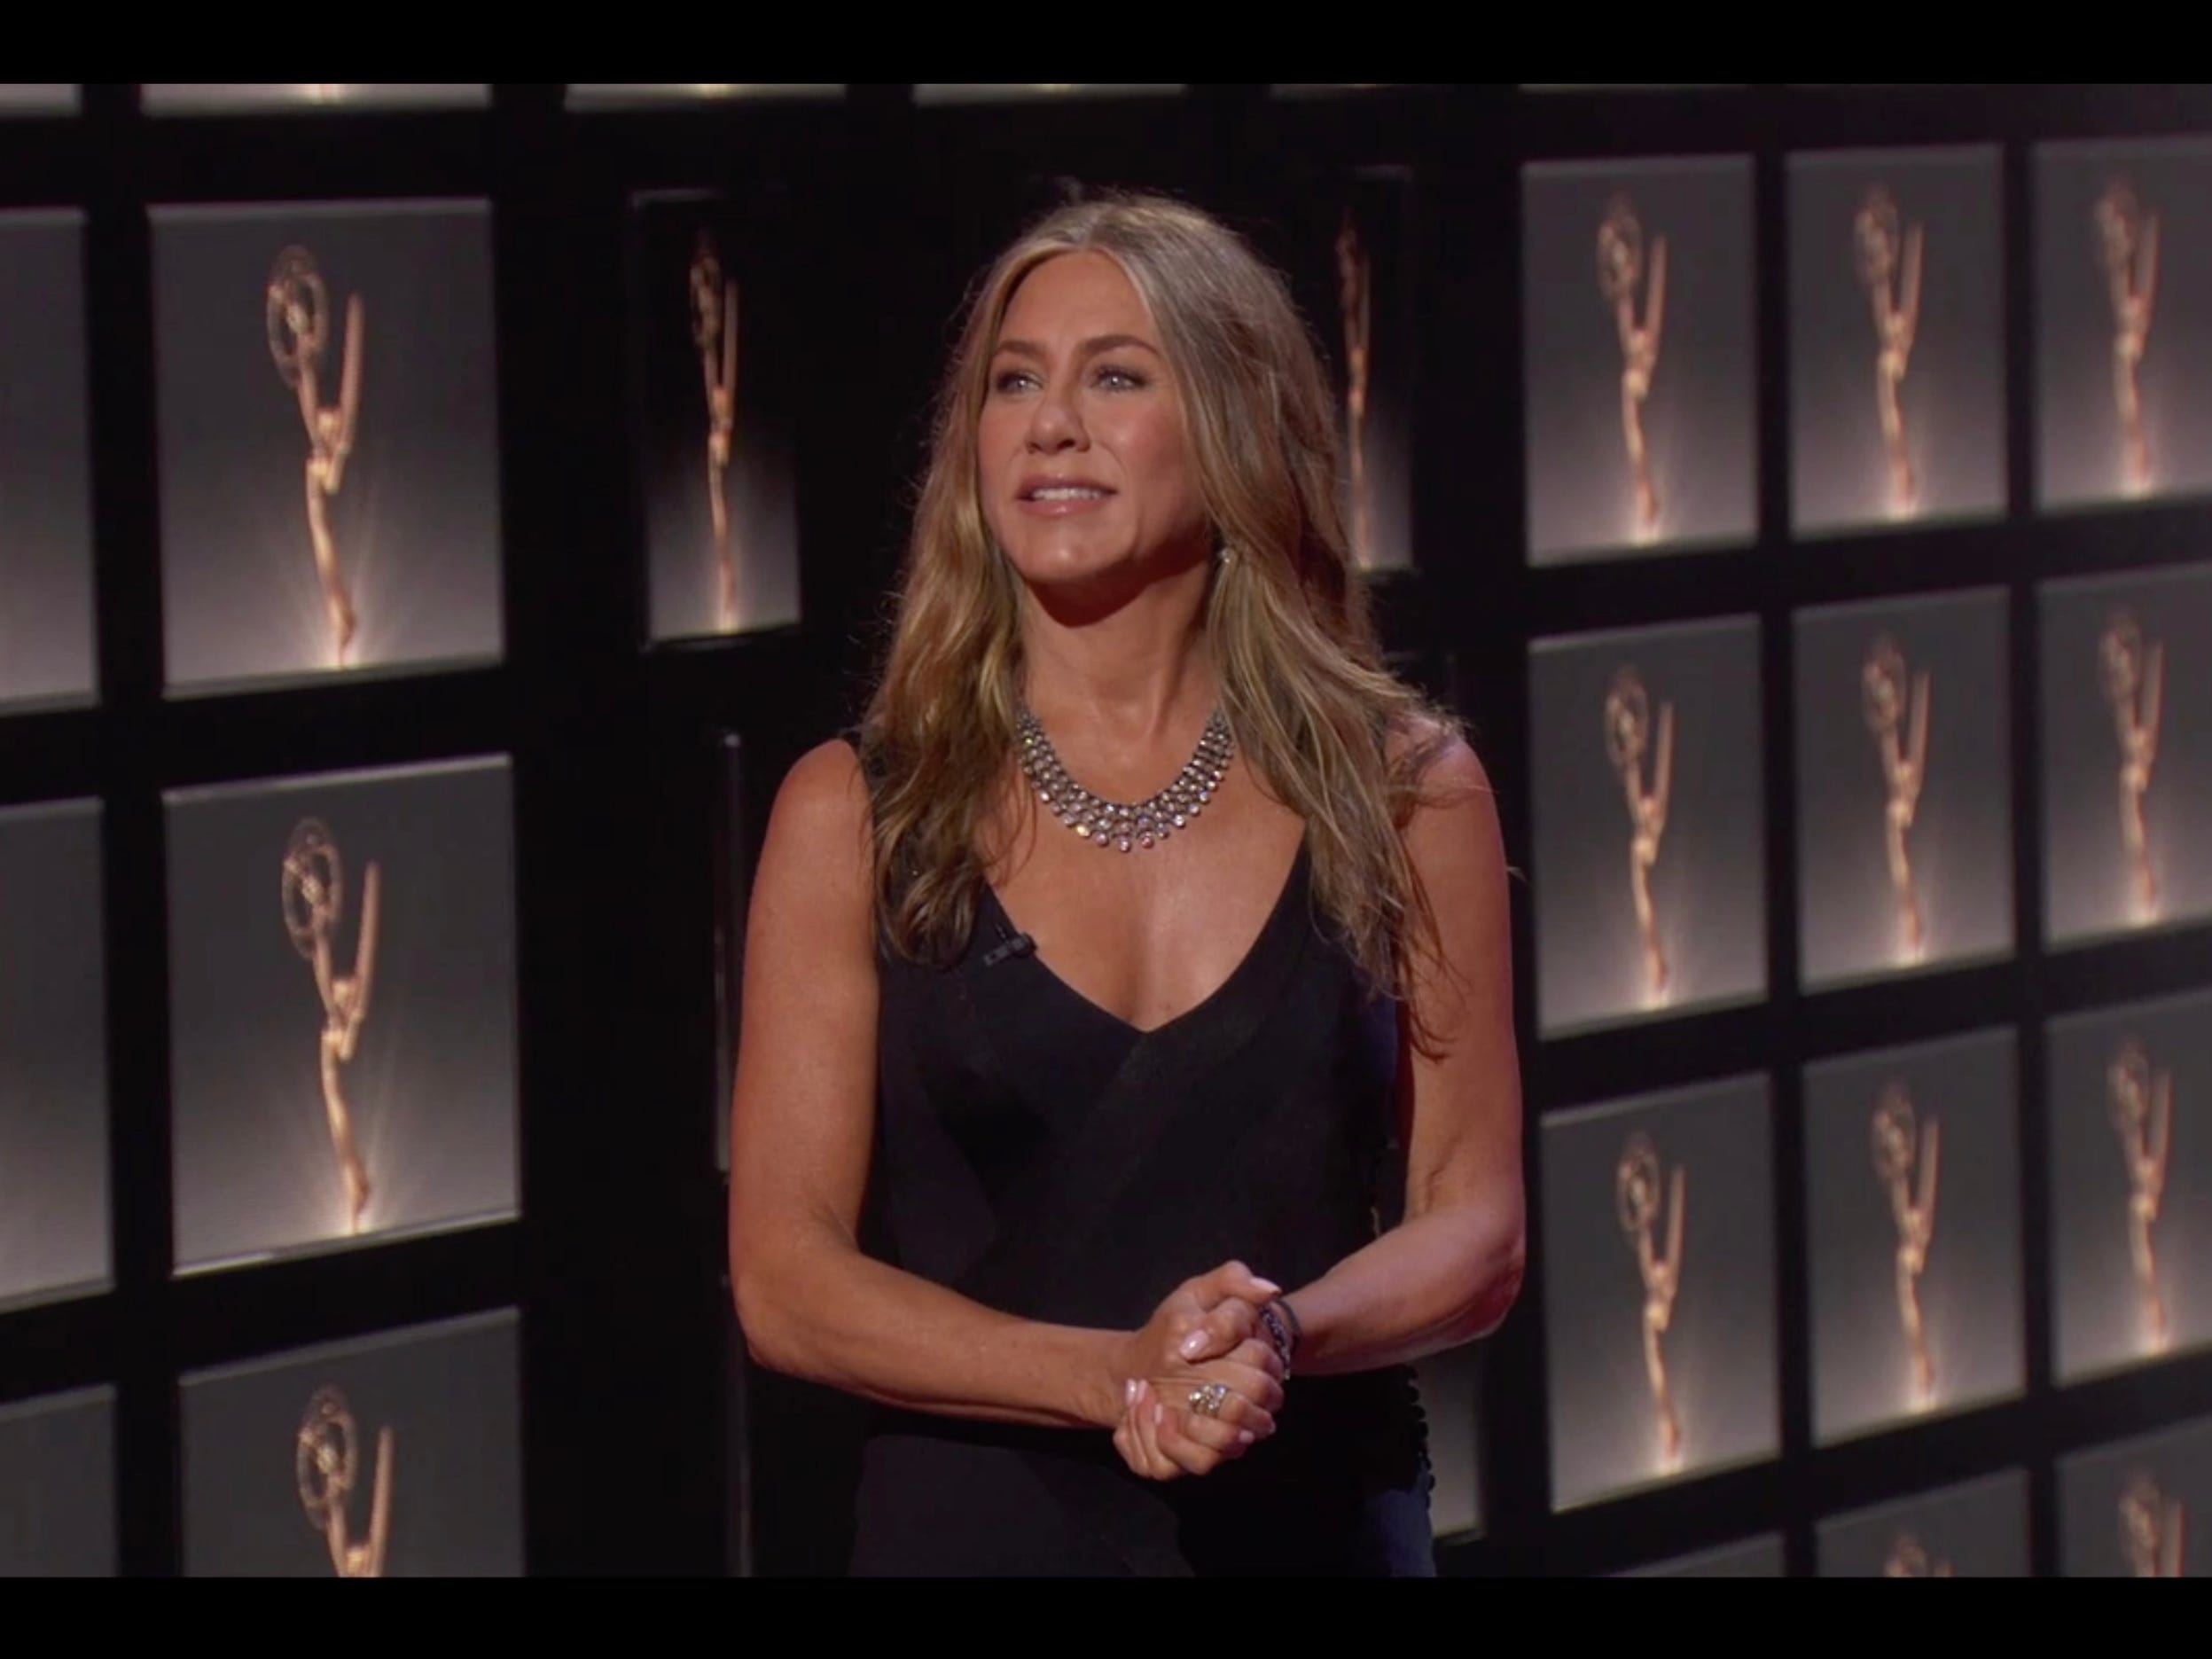 Jennifer Aniston also presented at the 2020 Emmys Awards on Sunday night.